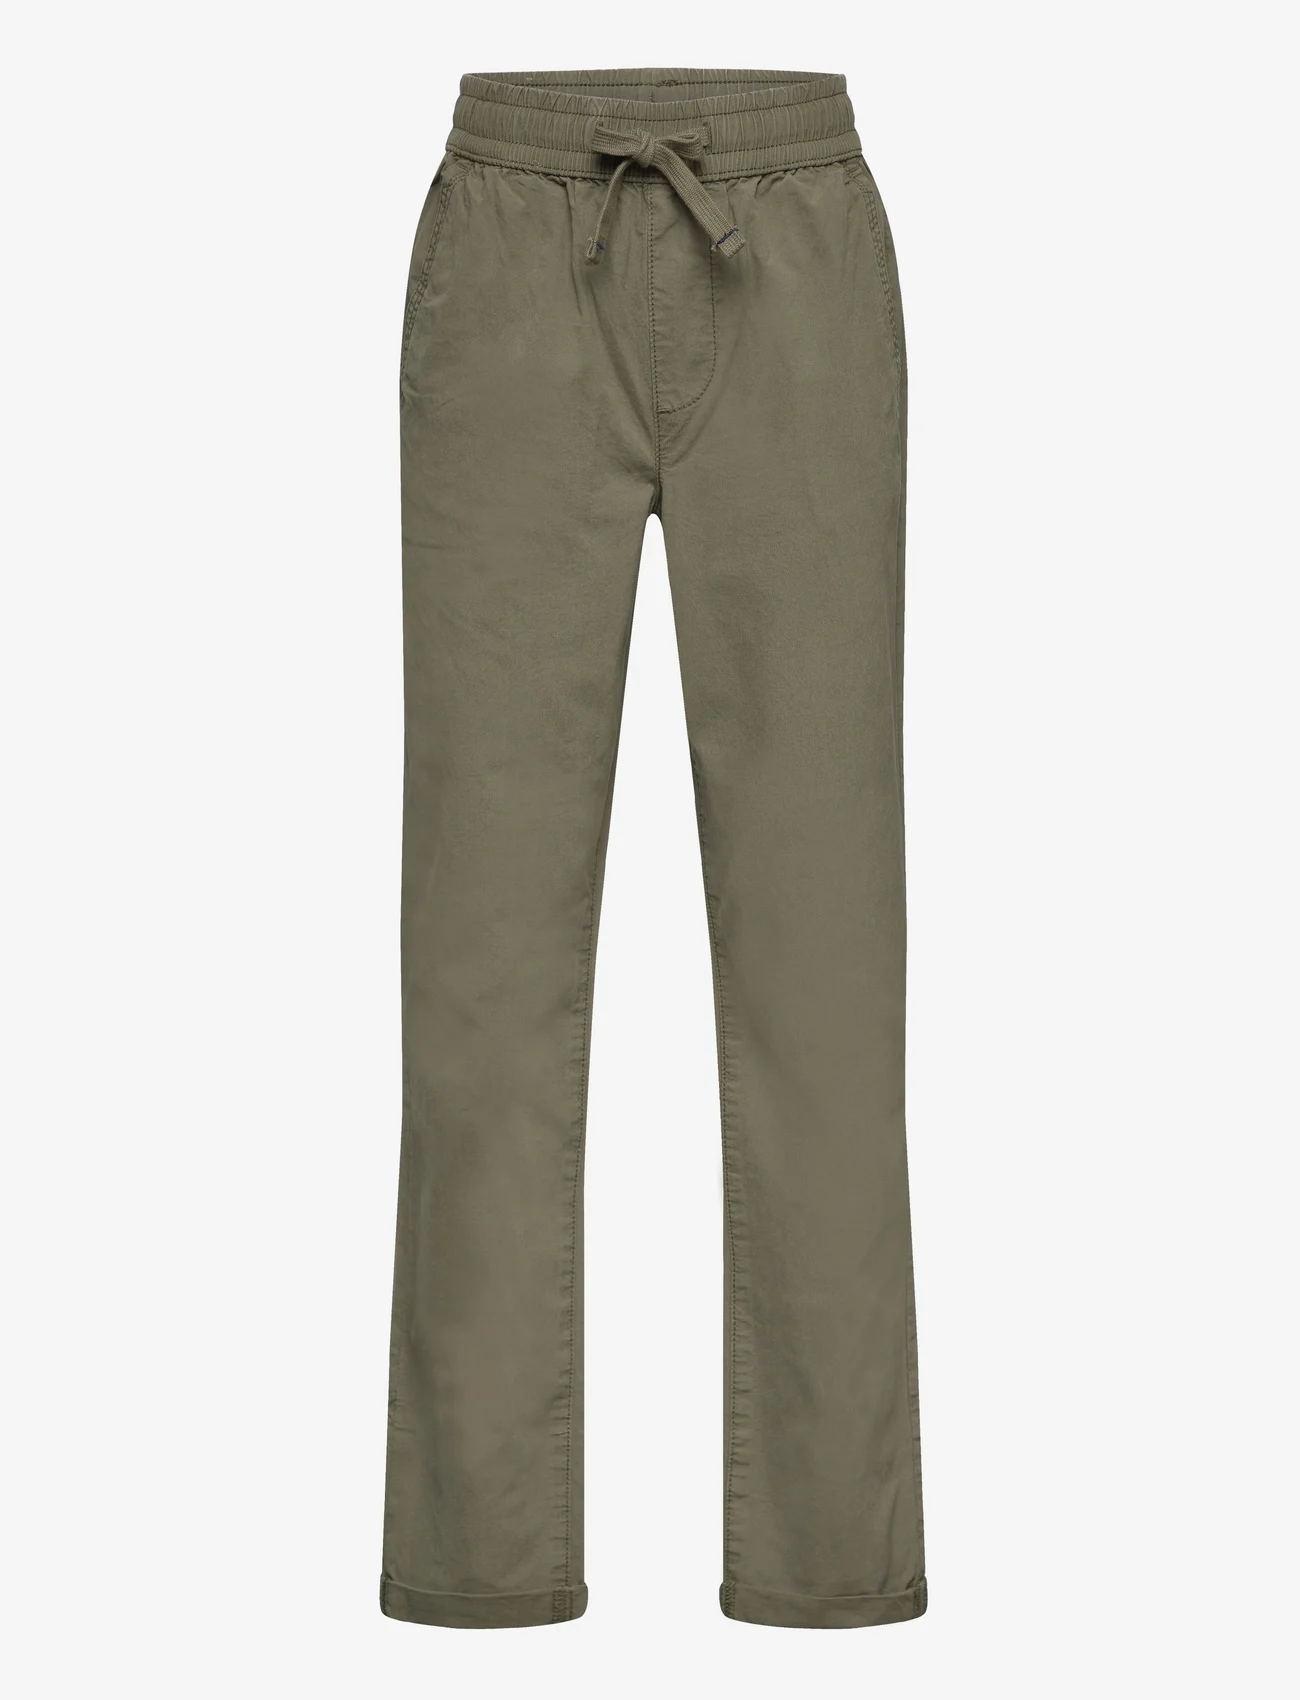 Mango - Cotton jogger-style trousers - jogginghosen - beige - khaki - 0